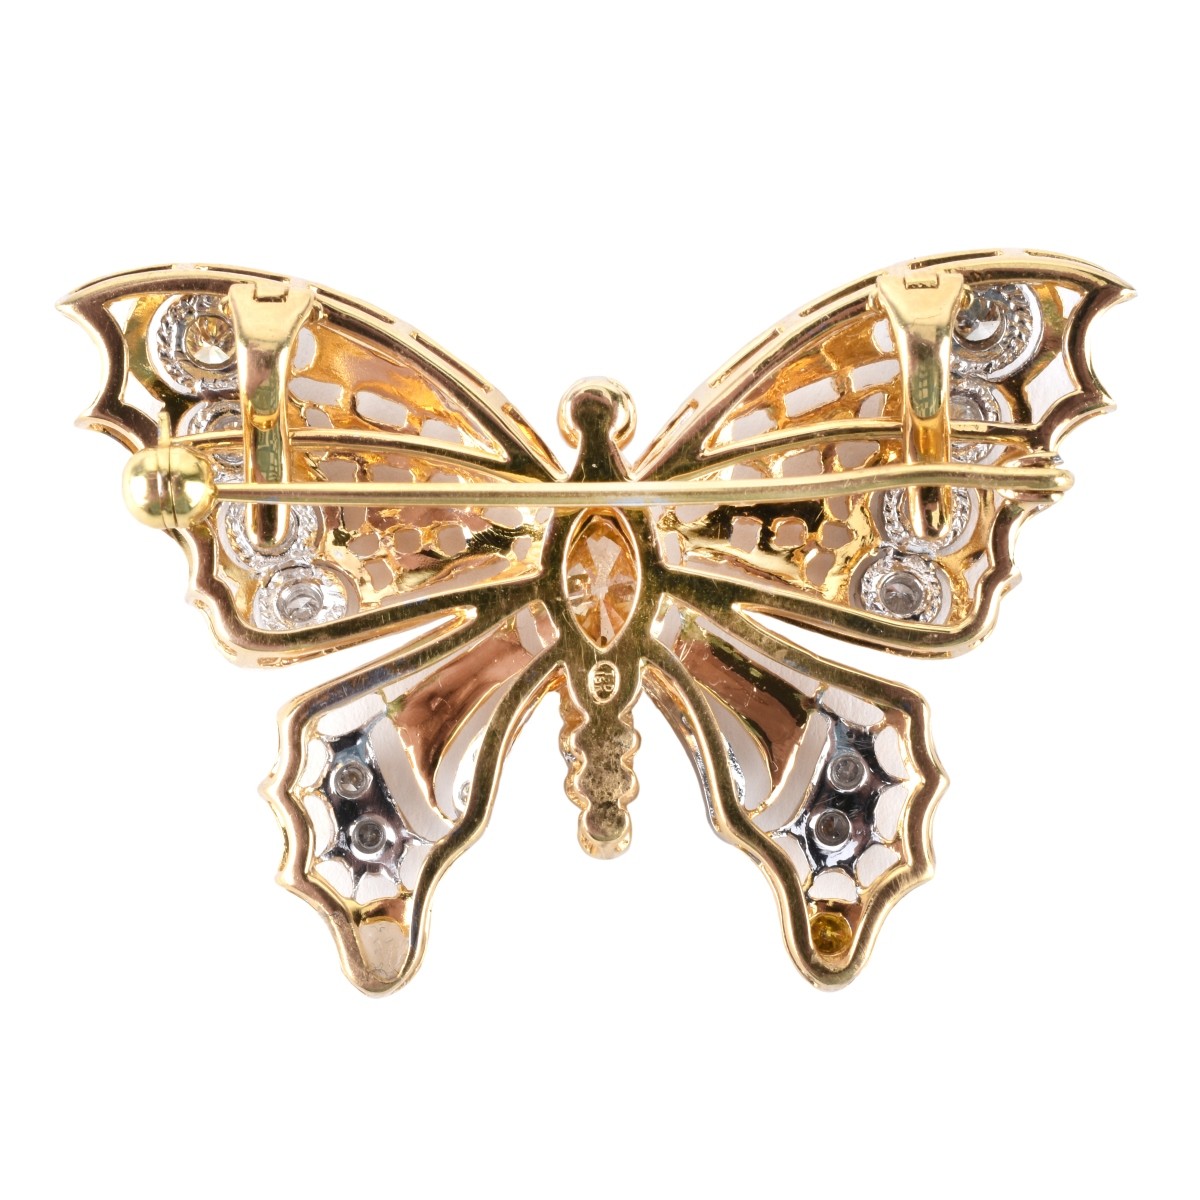 18K and Diamond Butterfly Brooch